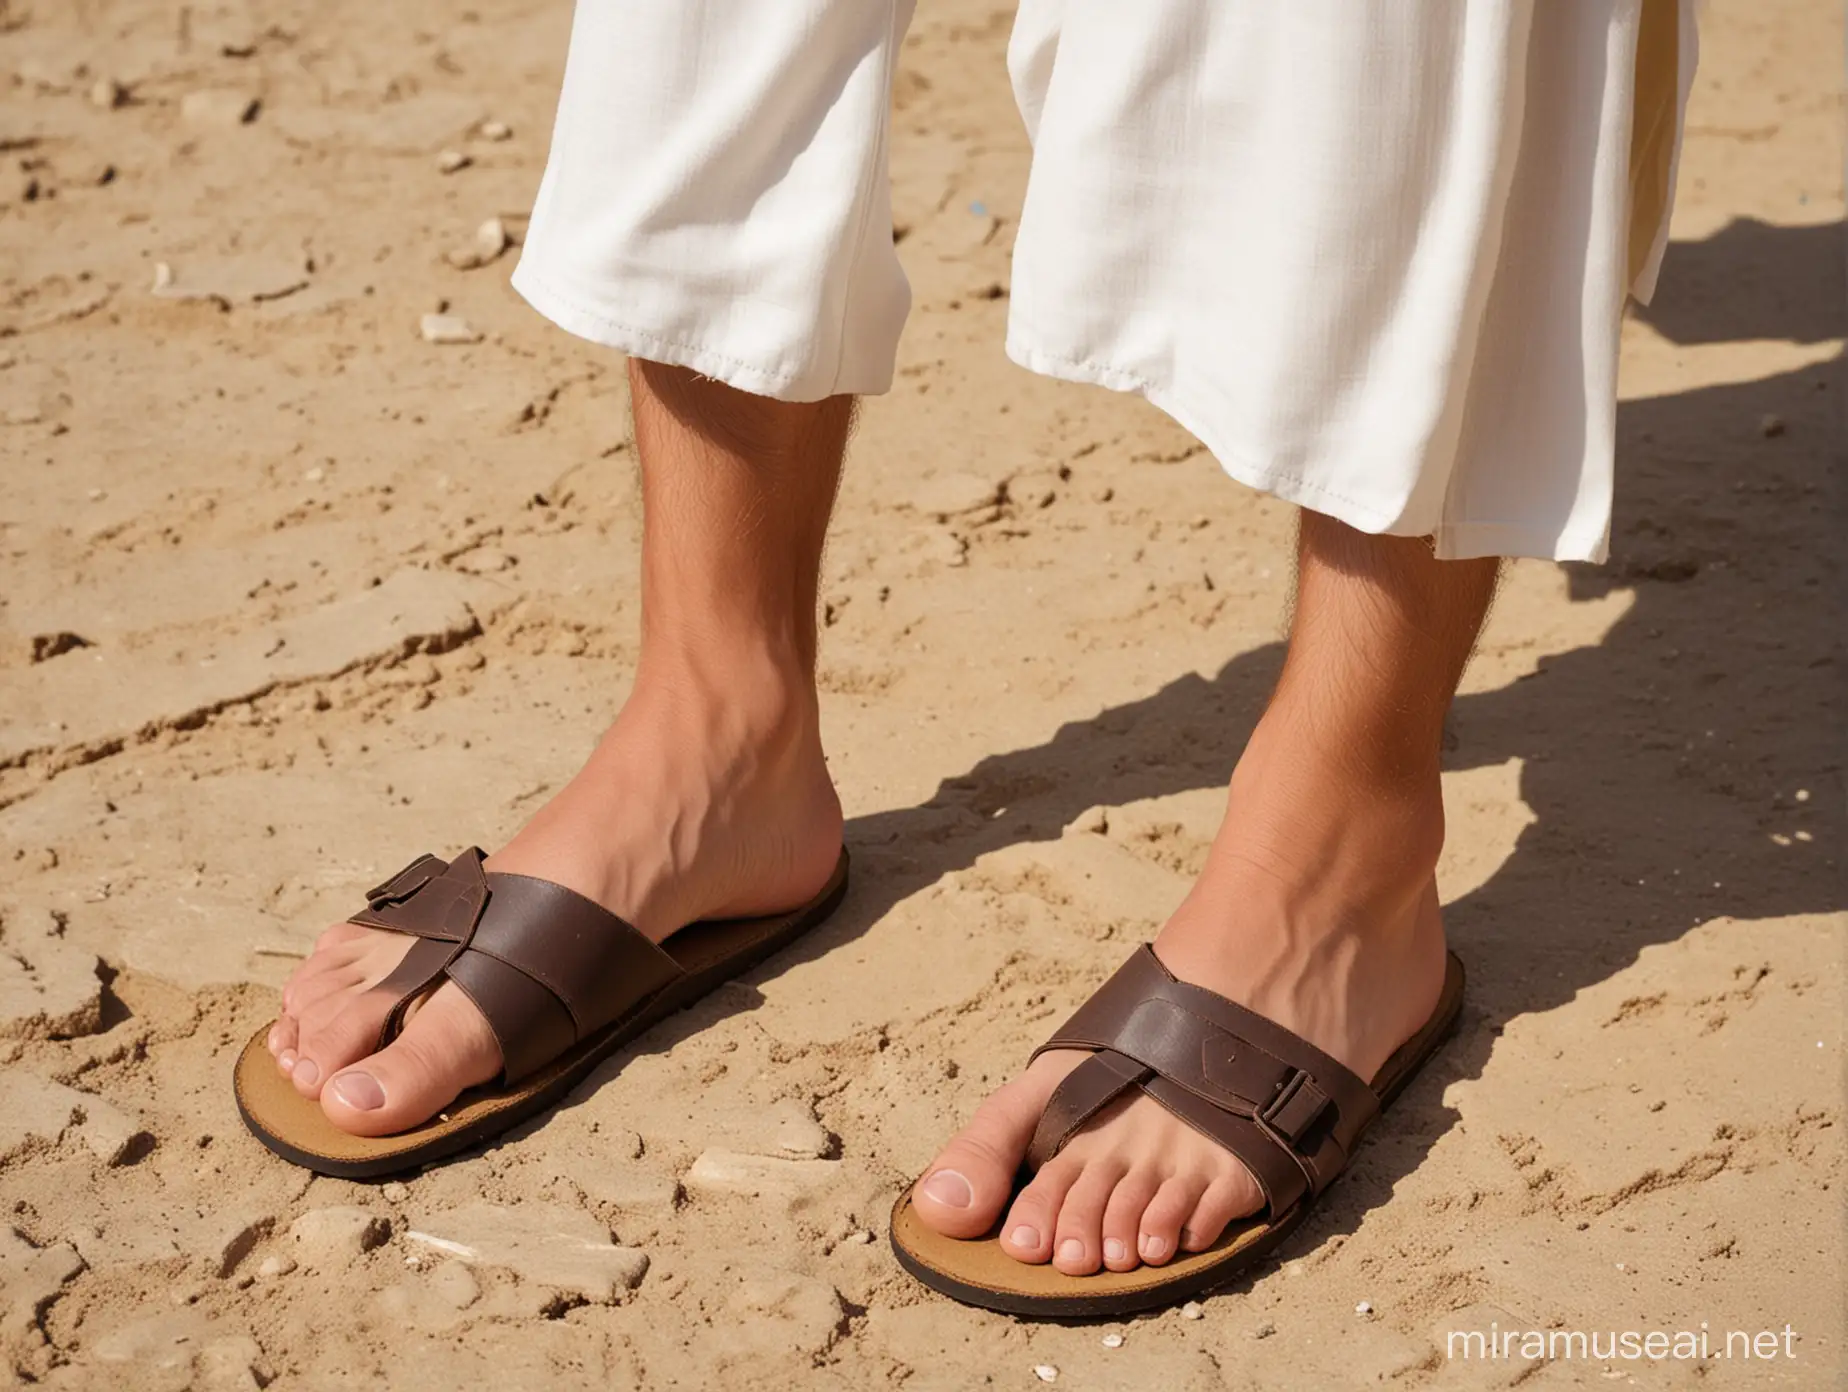 Sandals of Jesus Symbolic Representation of Divinity